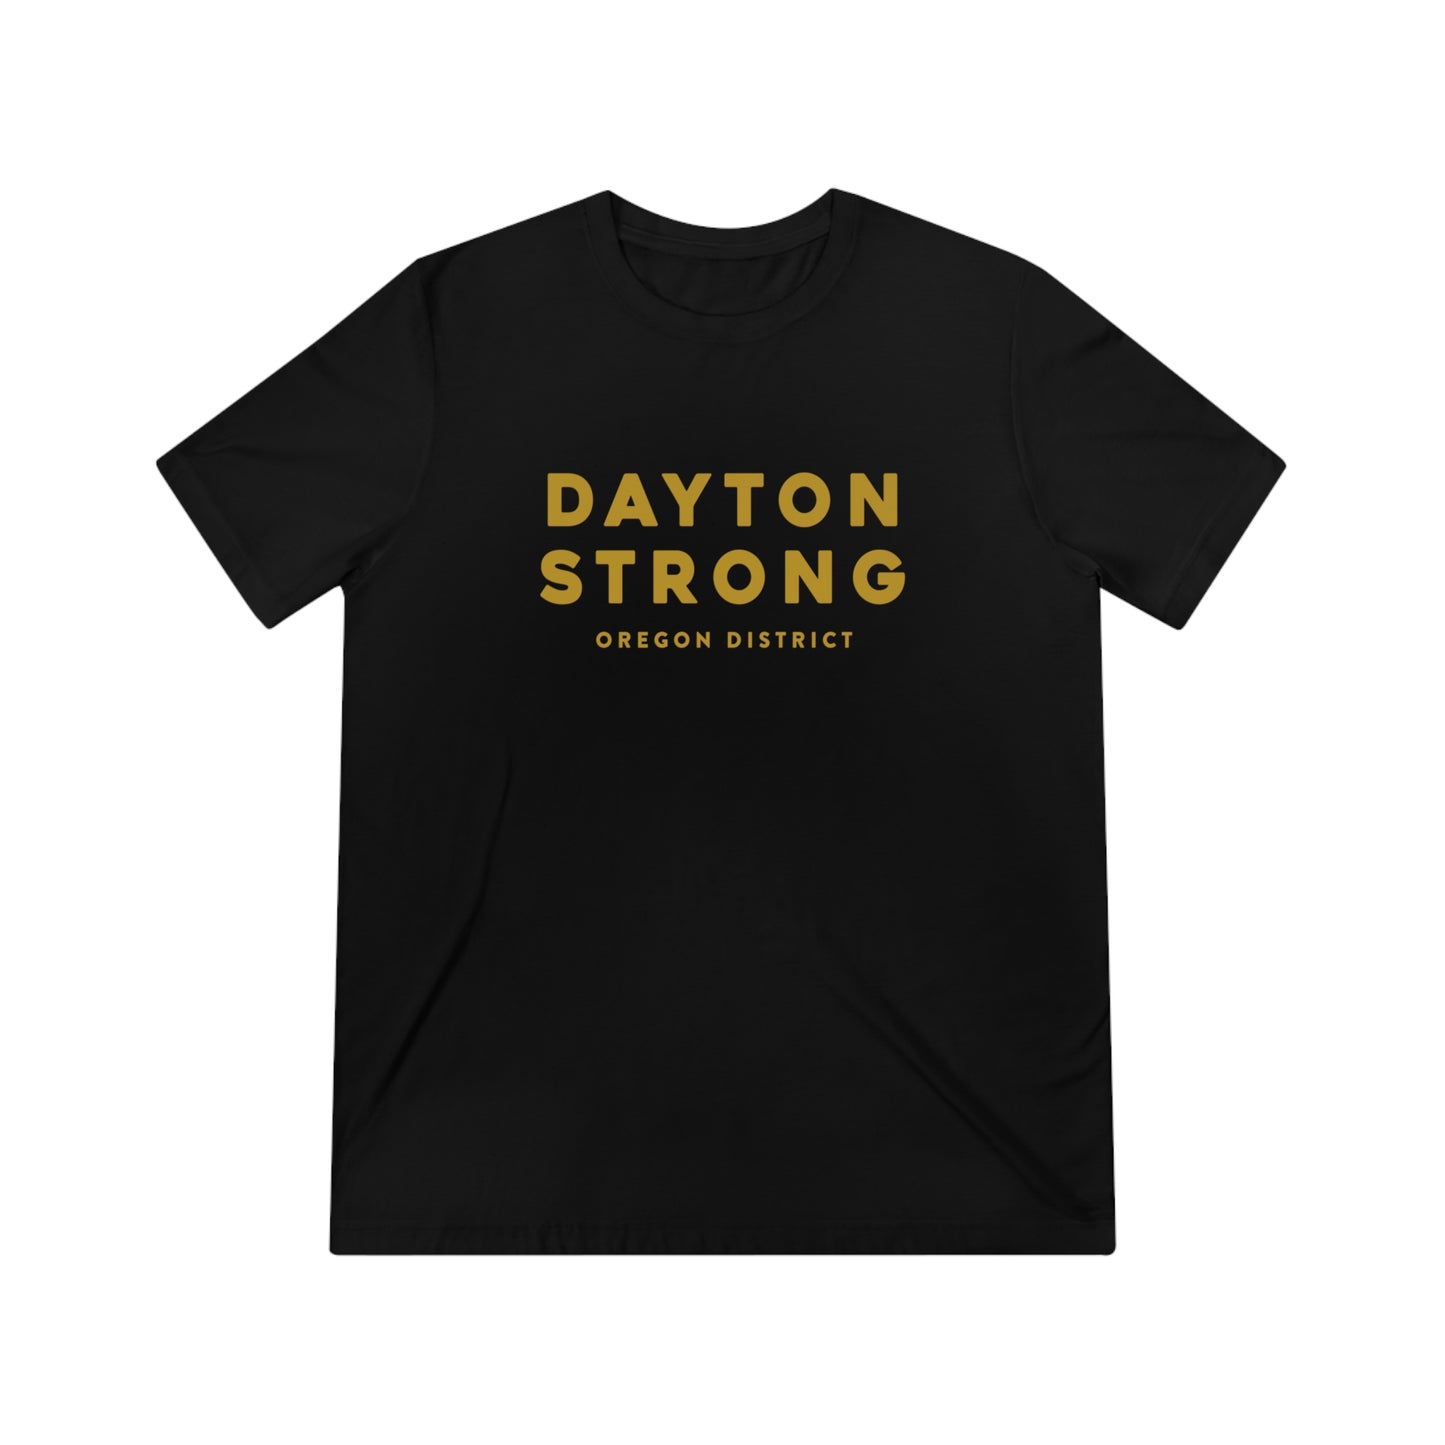 Dayton Strong Oregon District Tee